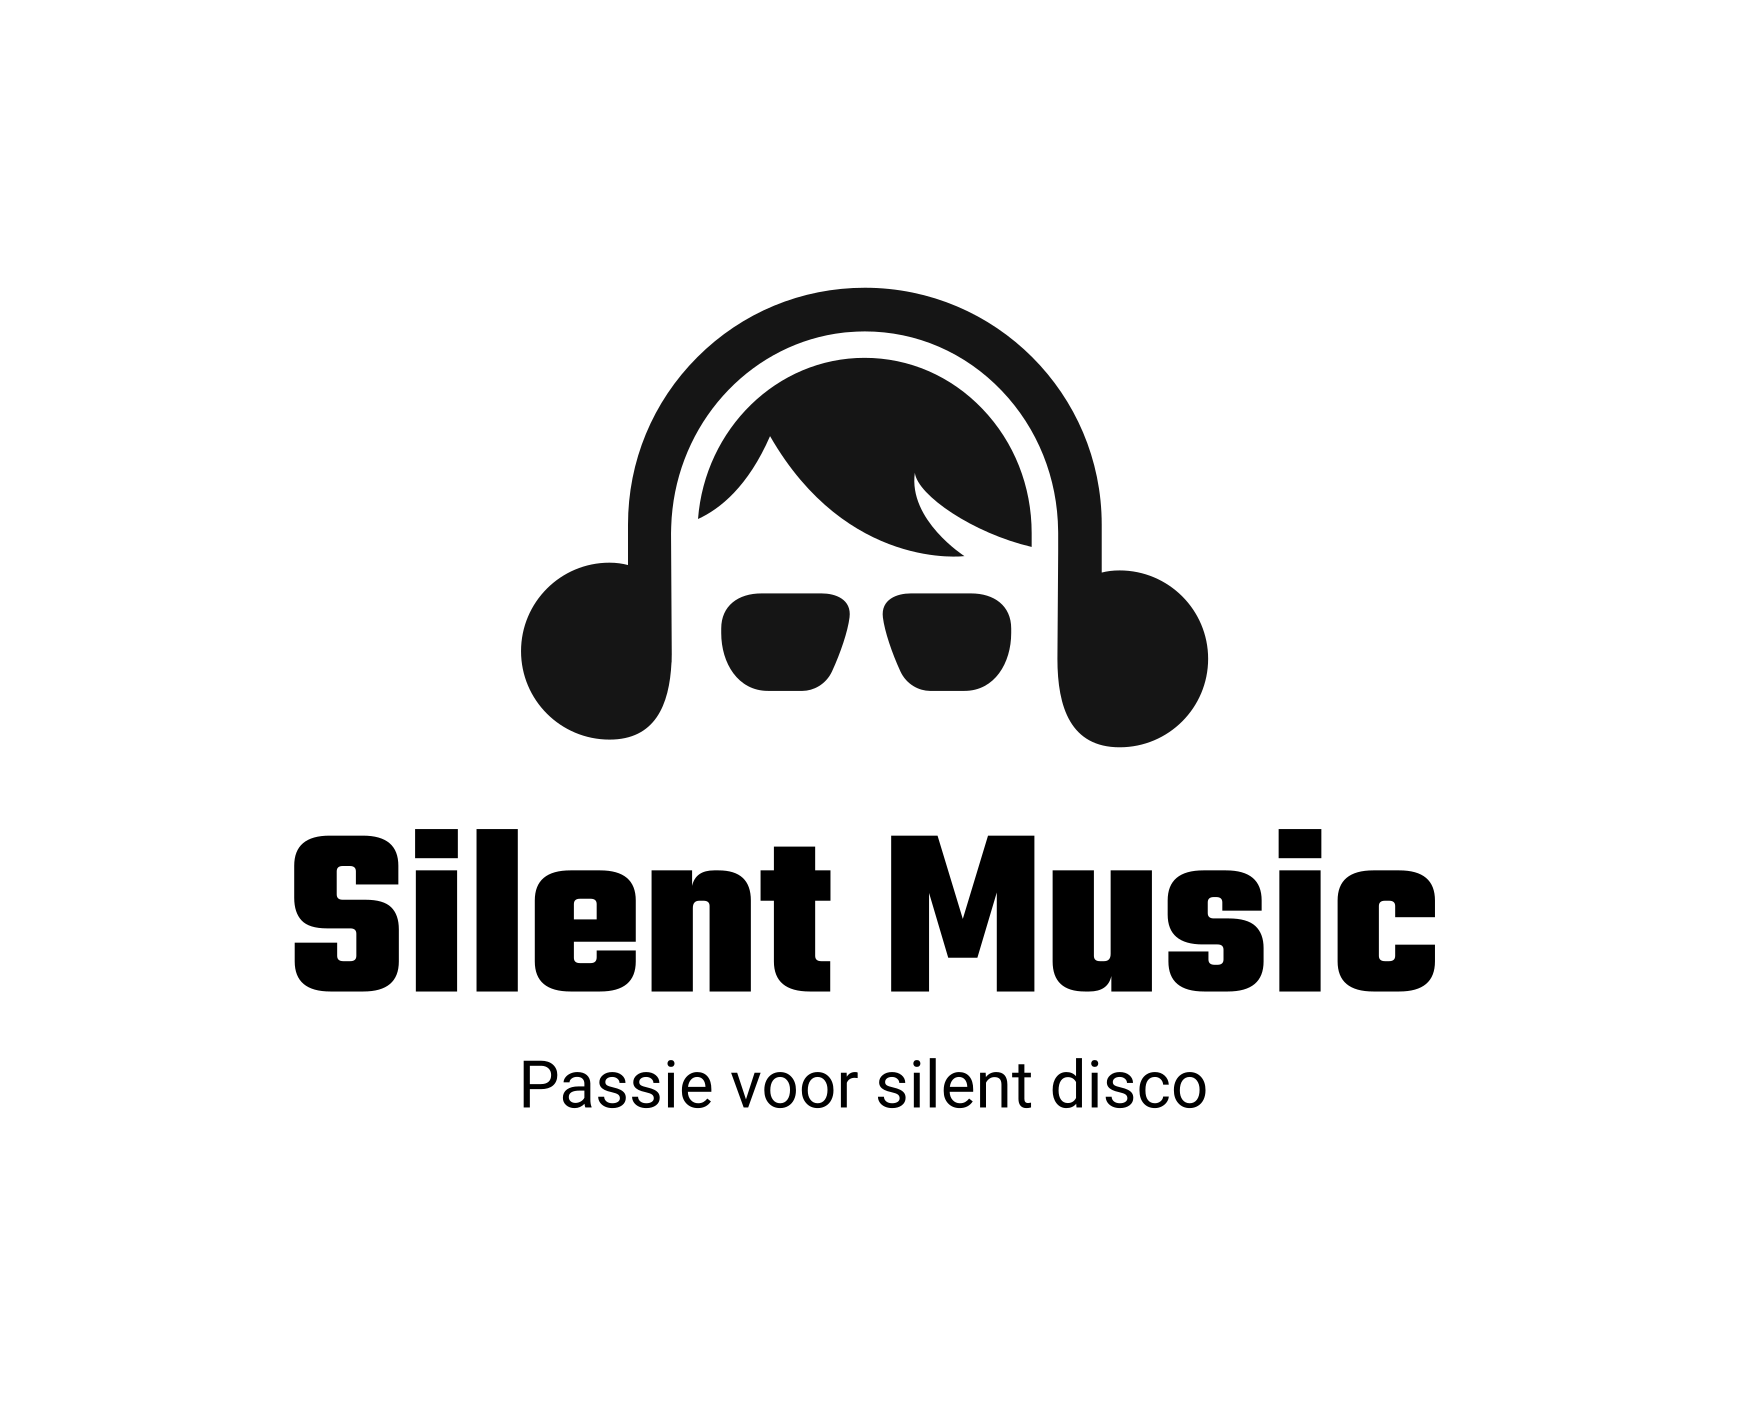 Silent music